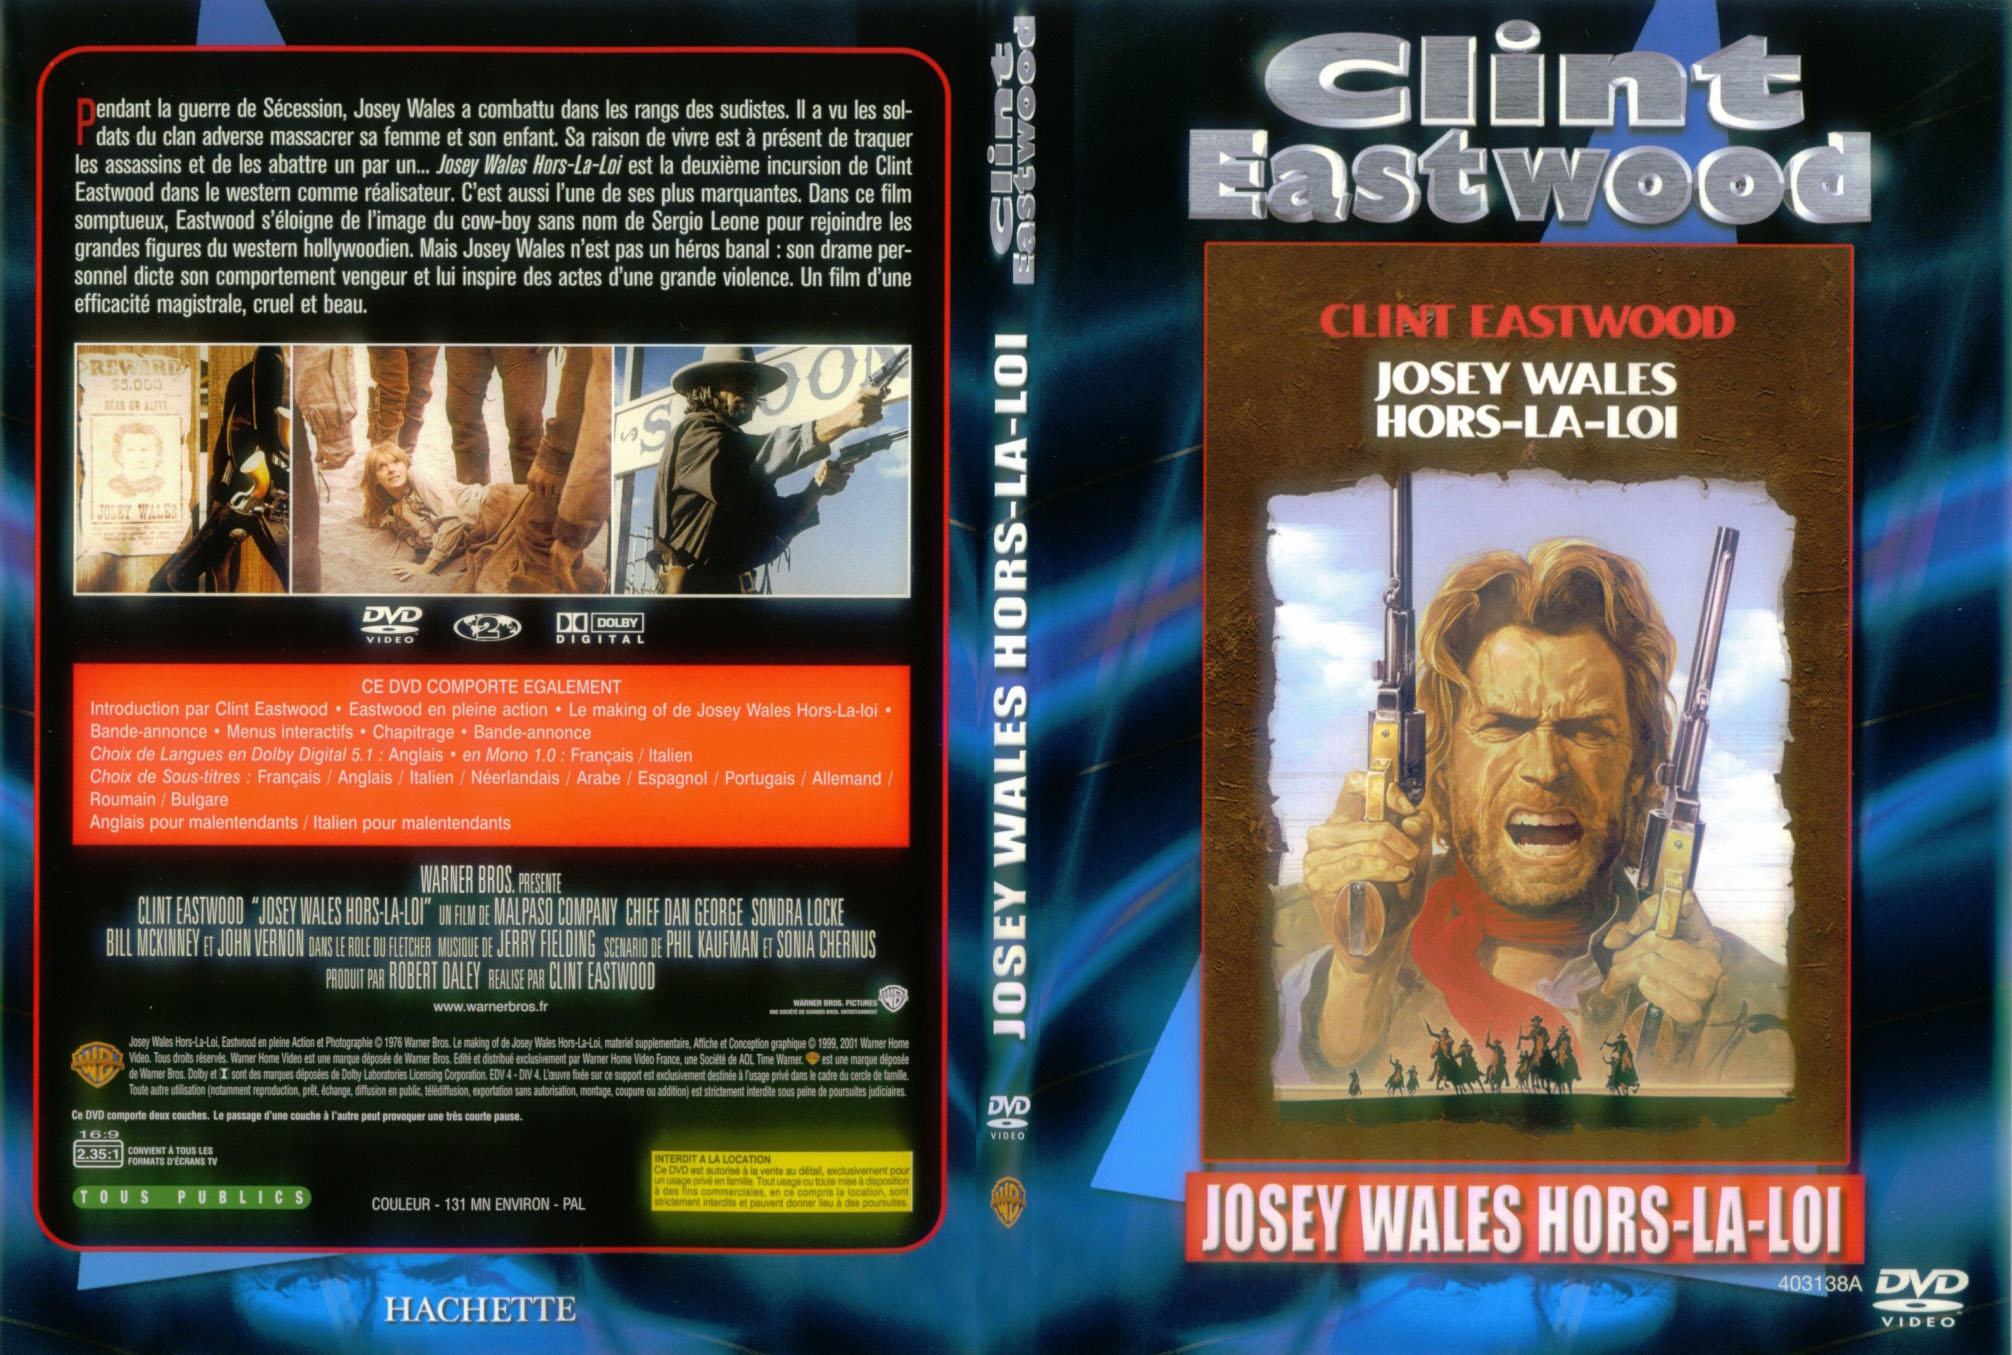 Jaquette DVD Josey Wales hors-la-loi - SLIM